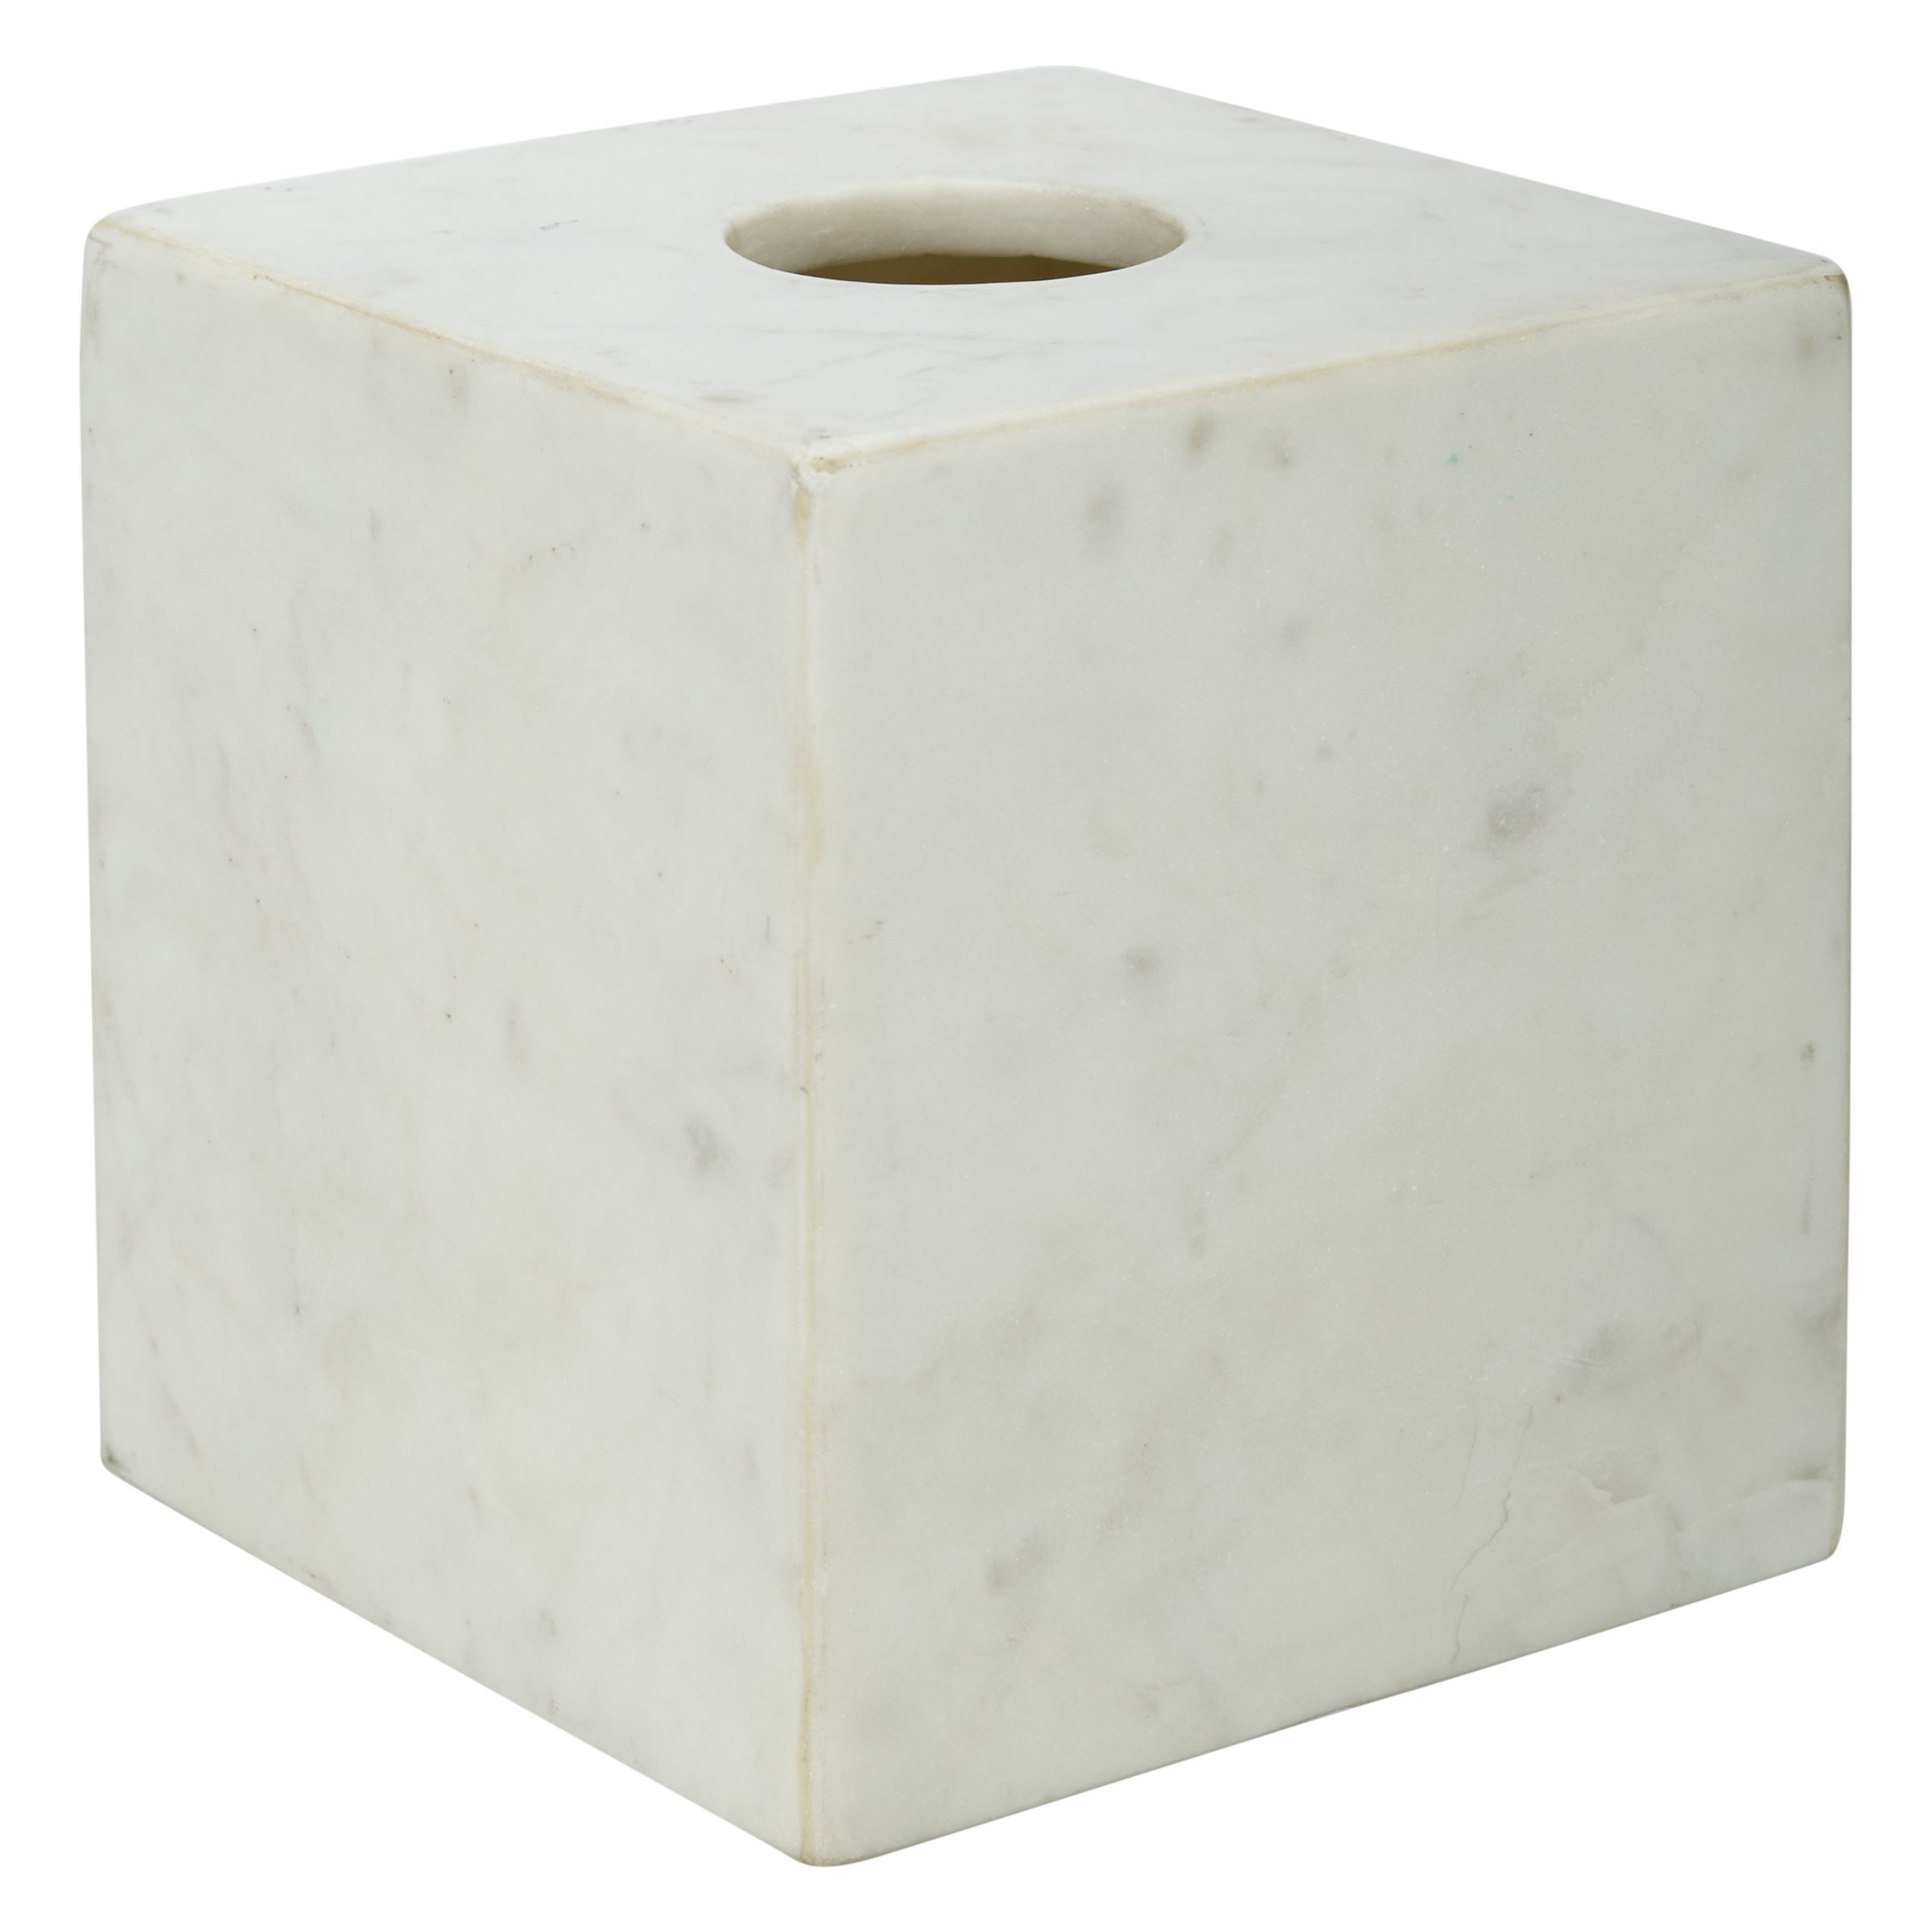 John Lewis & Partners White Marble Tissue Box Cover